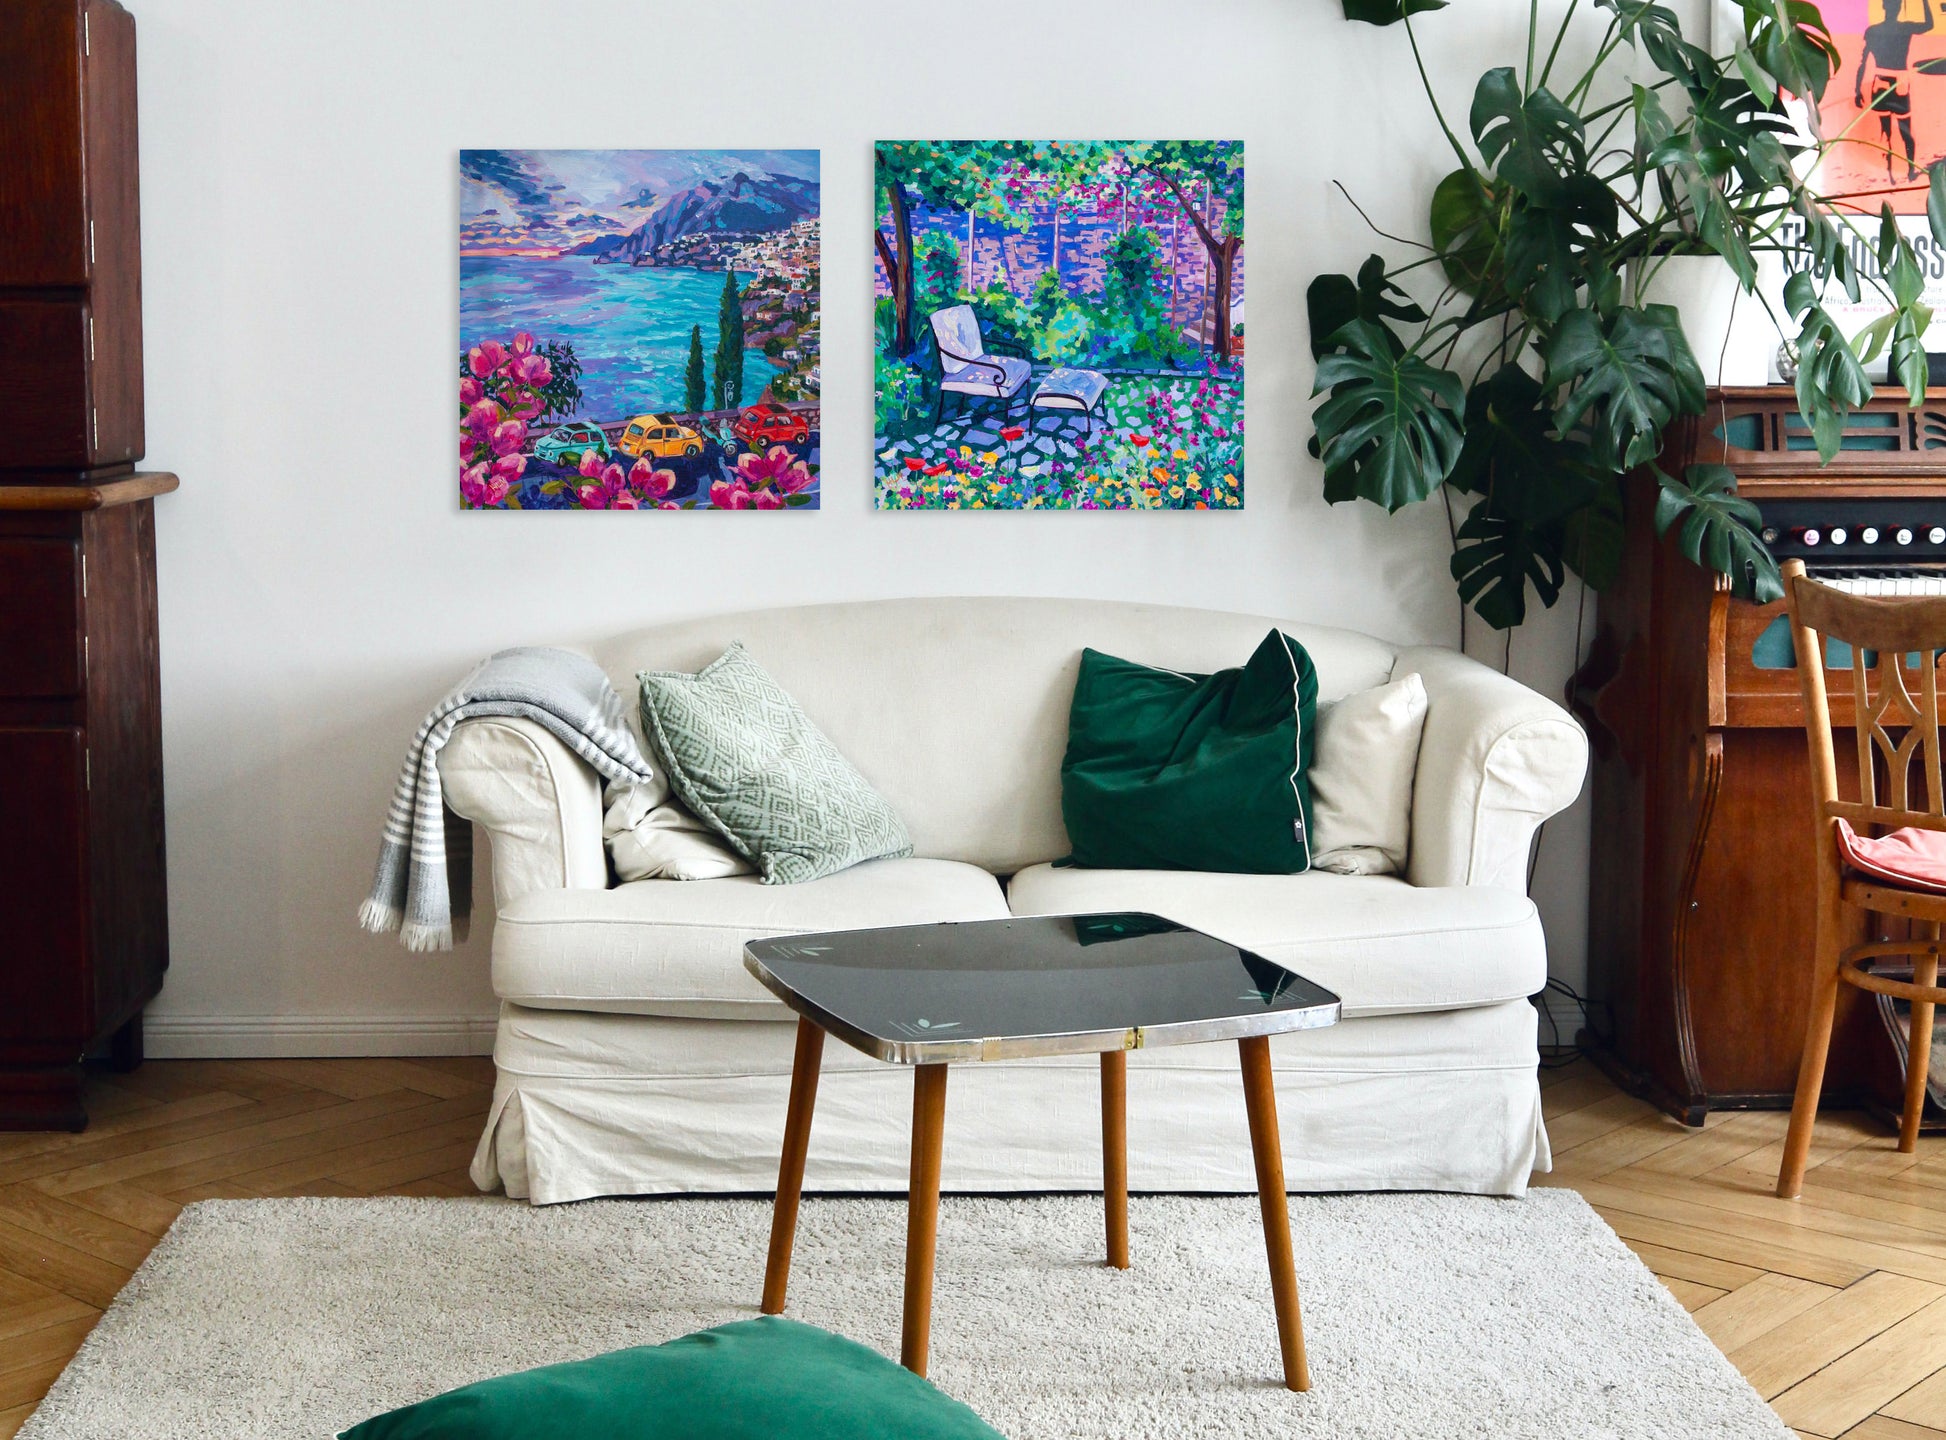 2 Italian paintings set in a causal living room